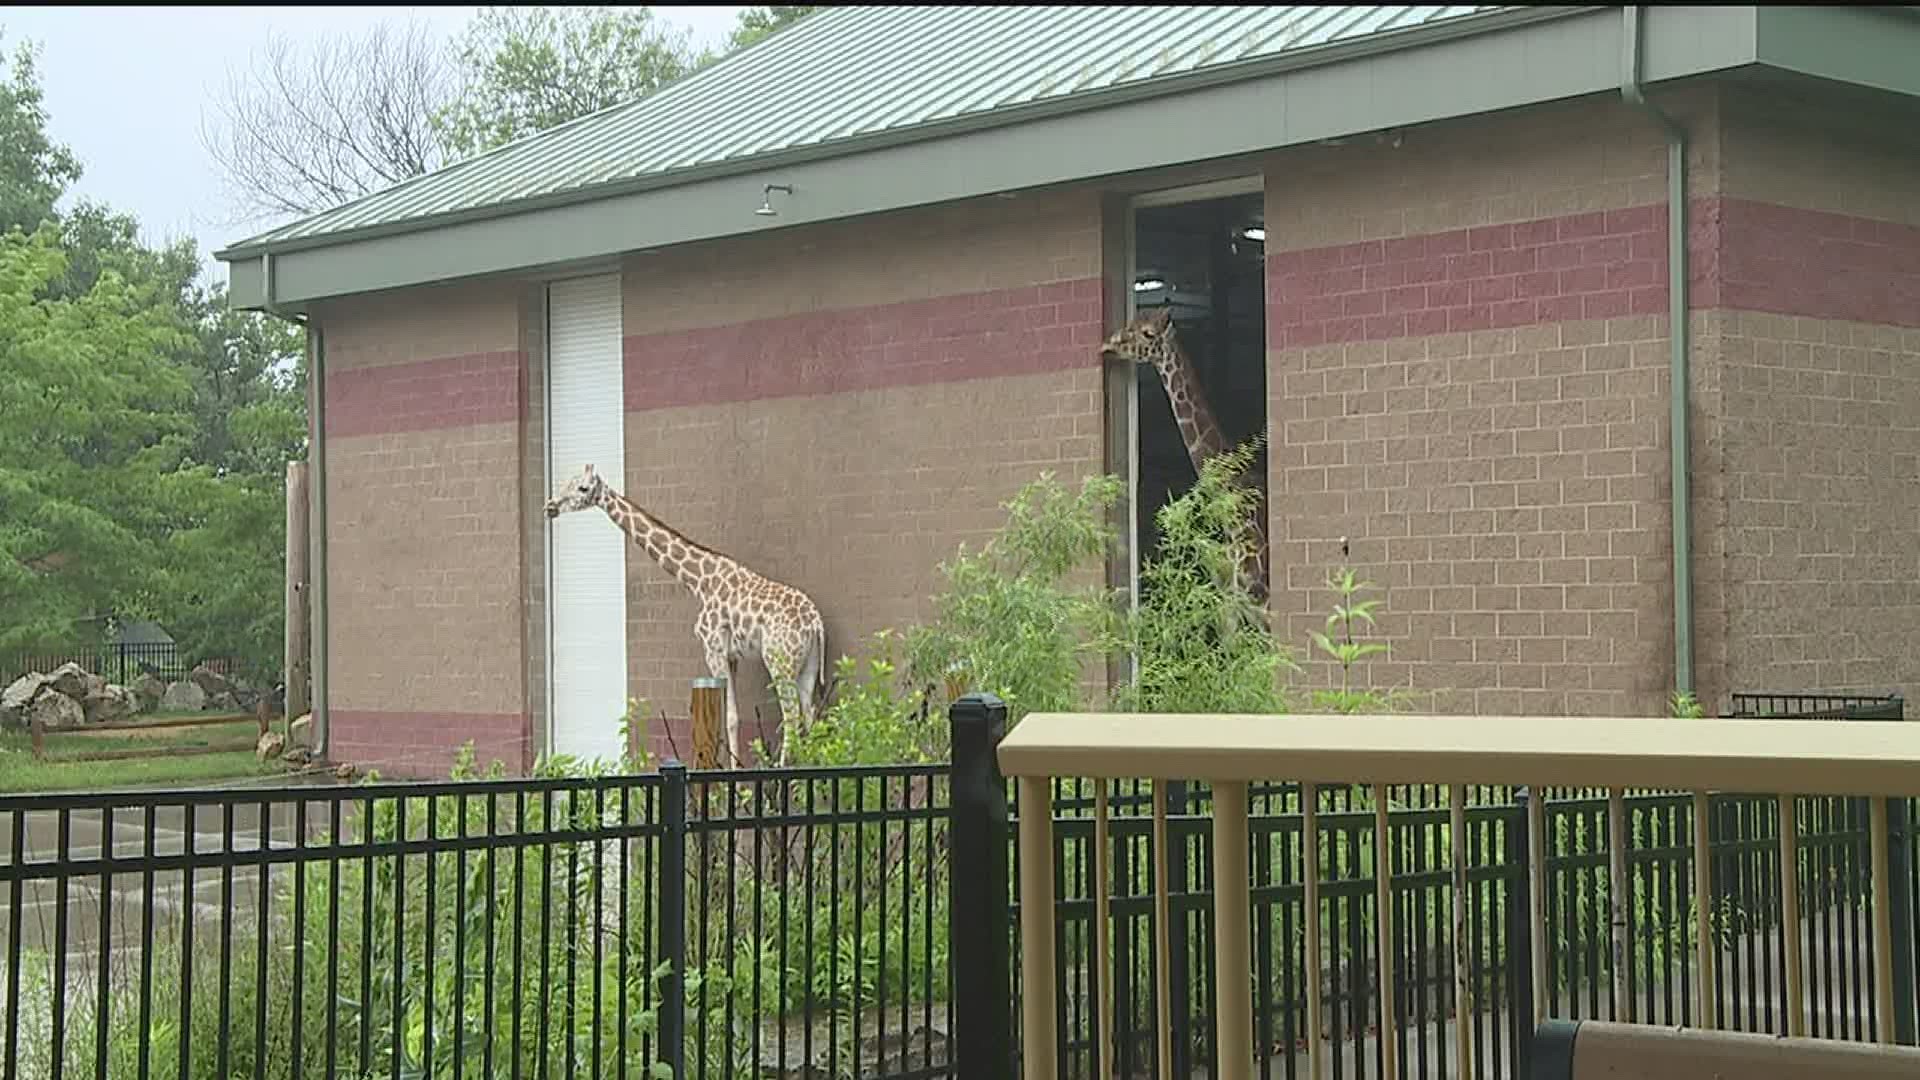 Niabi Zoo Receives Accreditation